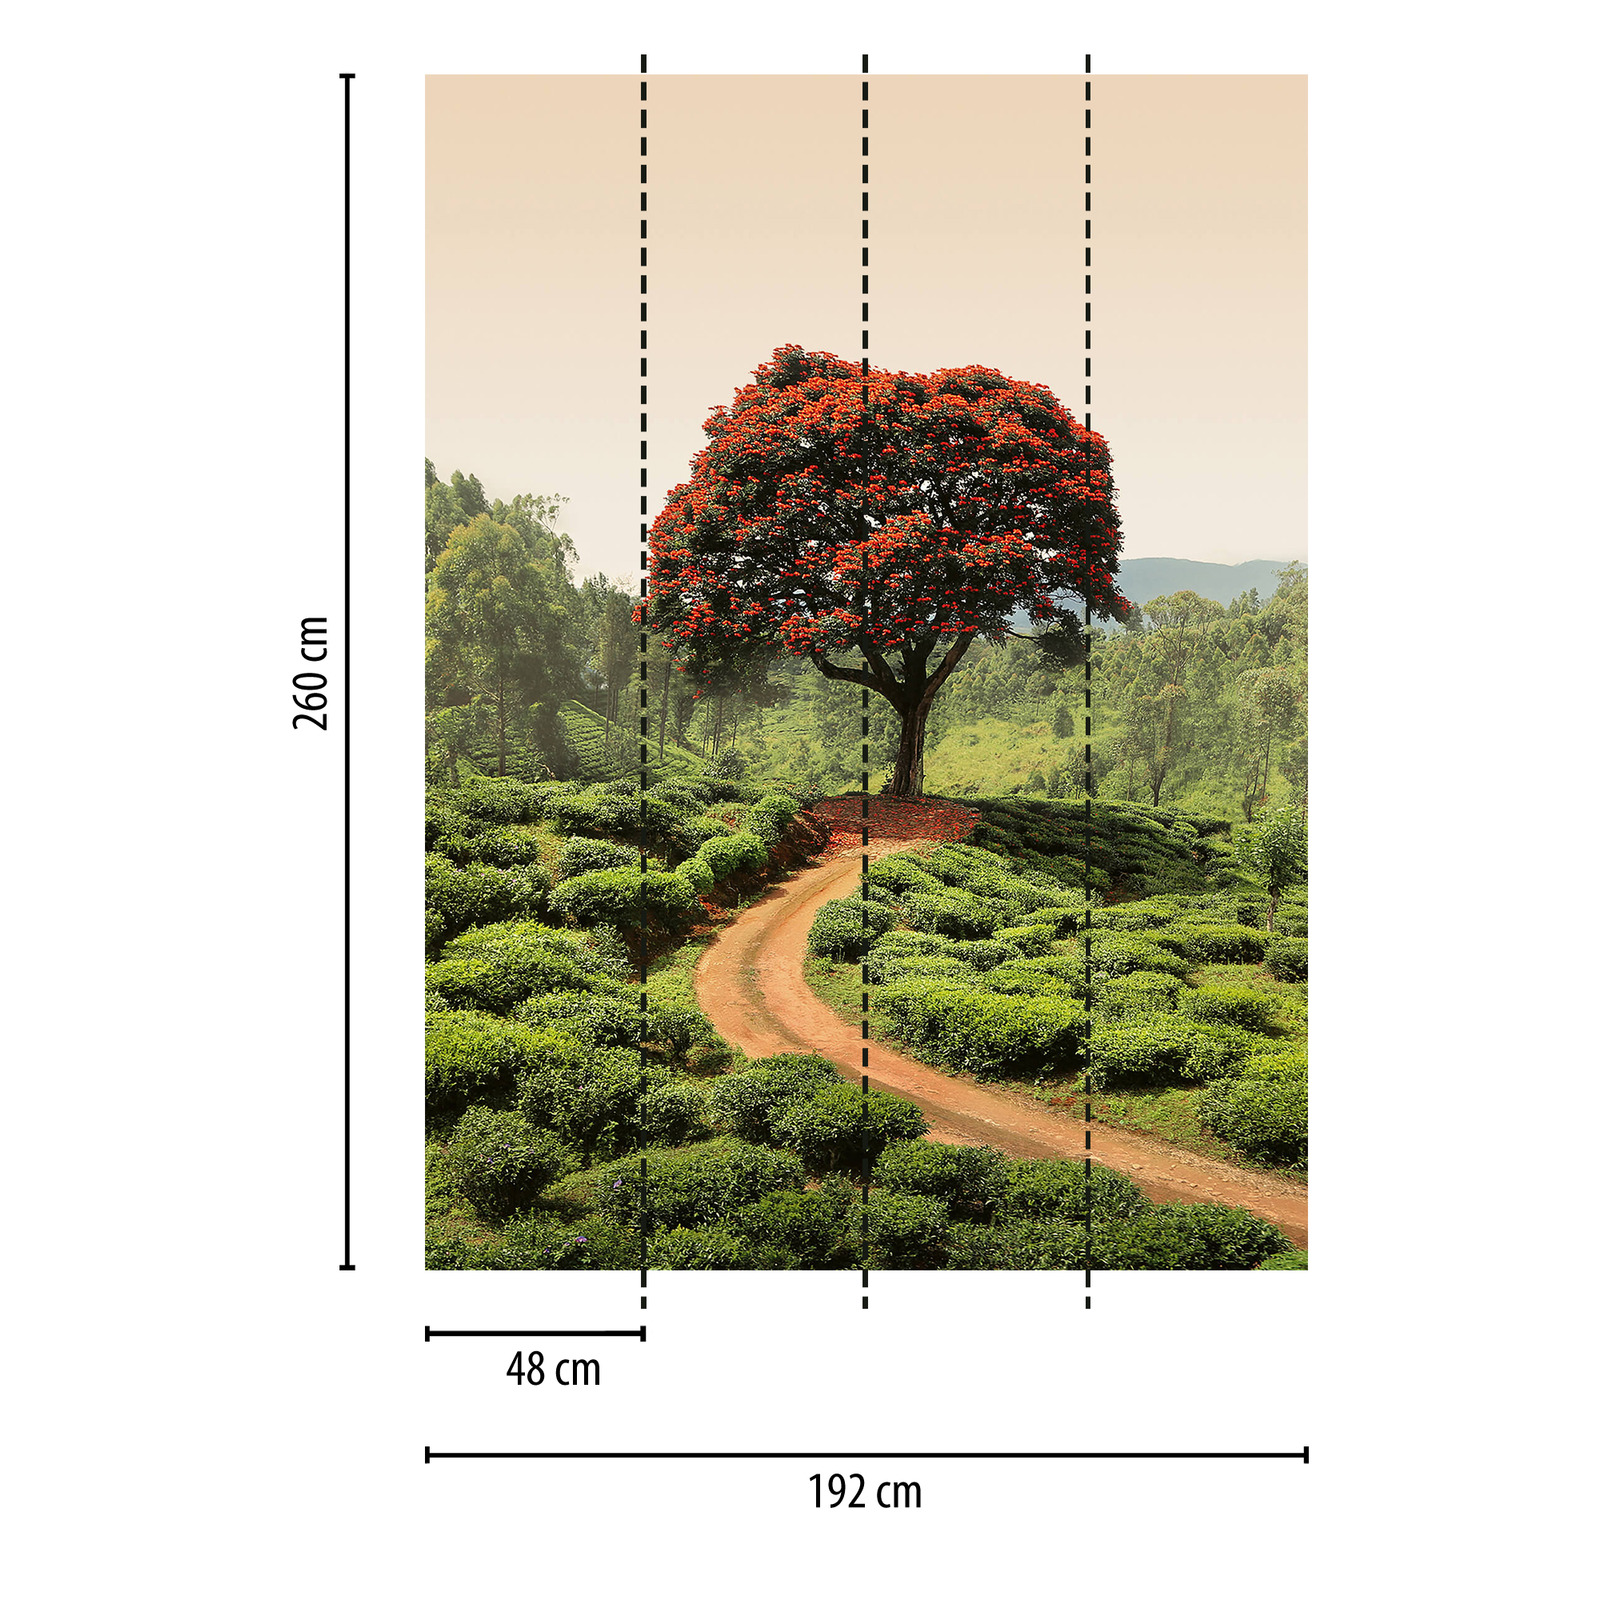             Fototapete Natur Landschaft mit rotem Baum
        